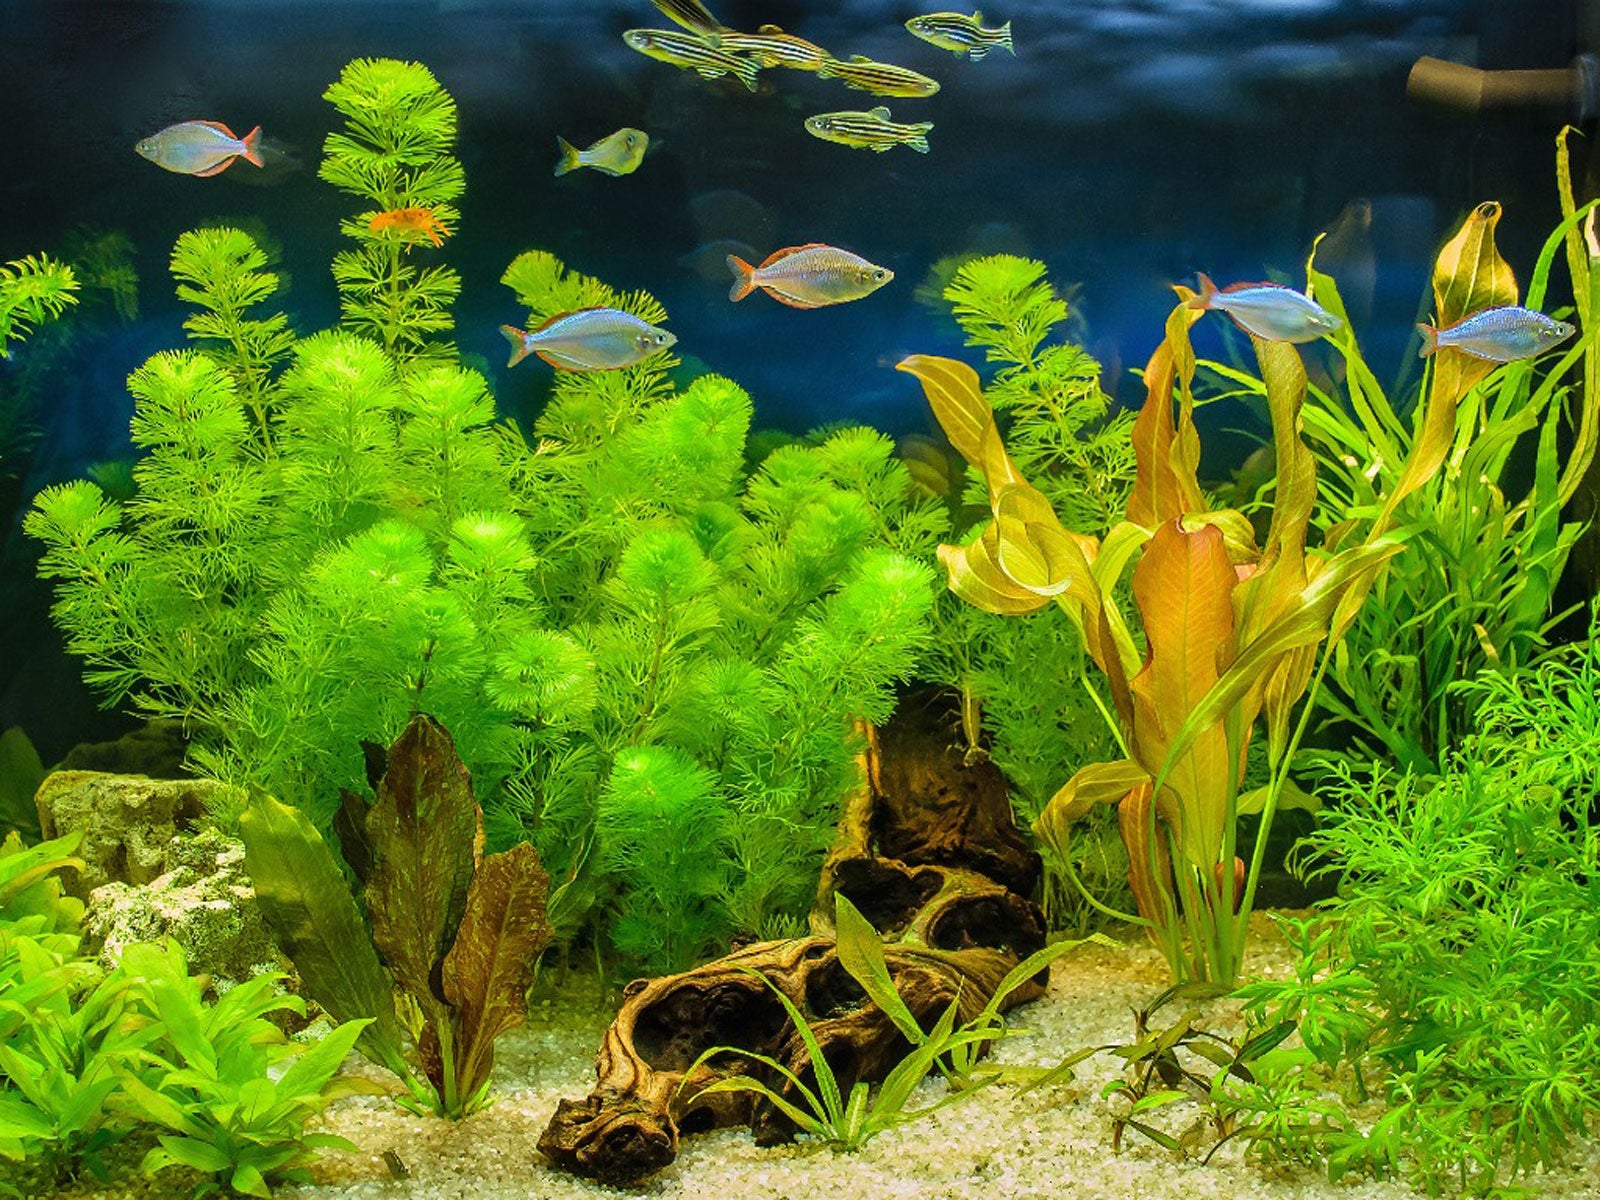 Aquarium Plants Seeds Aquatic Double Leaf Carpet Water Grass for Fish Tank Rock Lawn Garden Decor Small Leaf